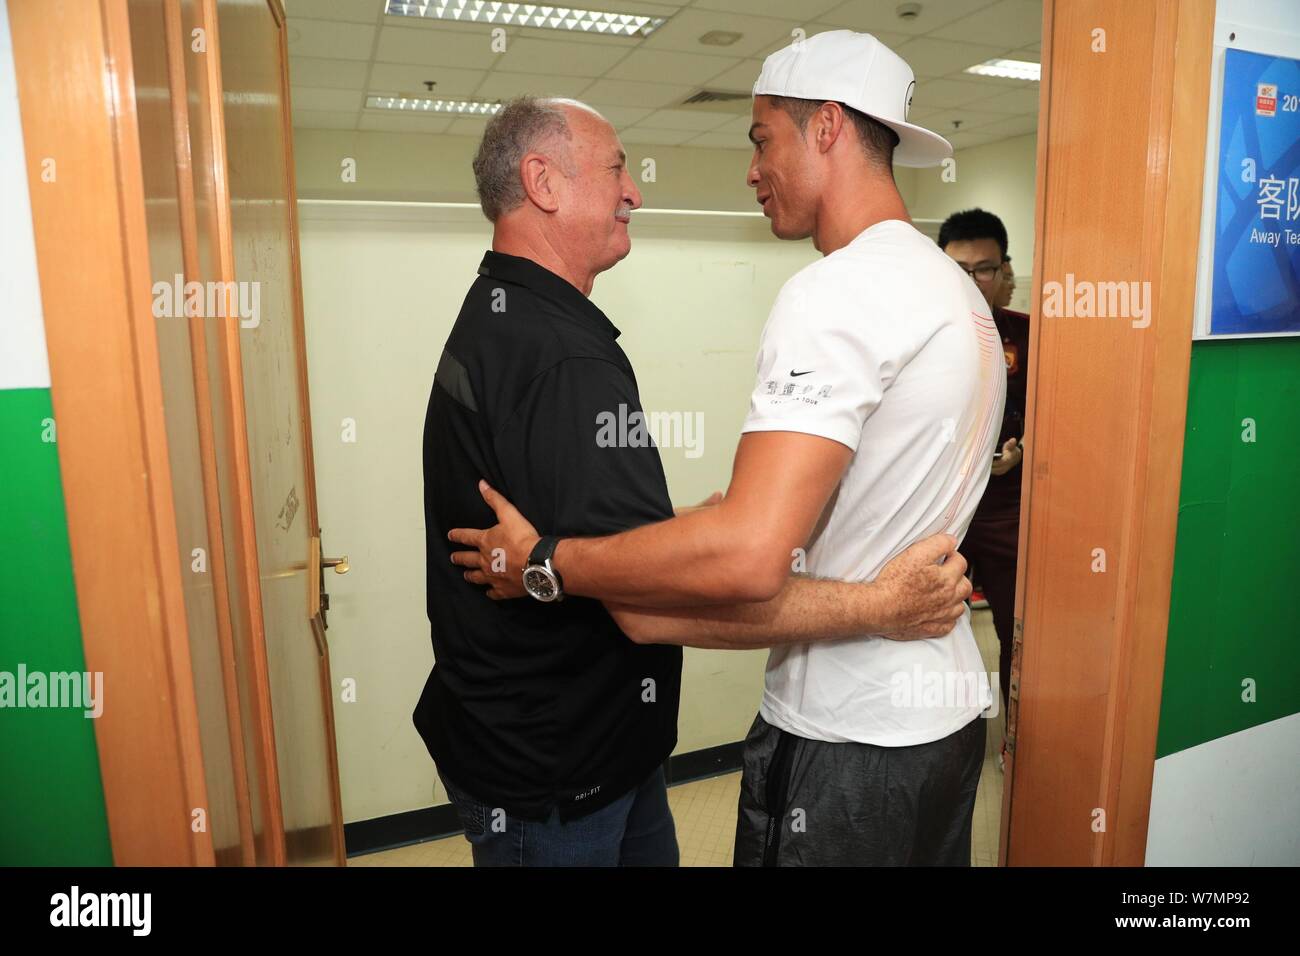 Portuguese football player Cristiano Ronaldo of Real Madrid, right, interacts with head coach Luiz Felipe Scolari of Guangzhou Evergrande F.C. at the Stock Photo